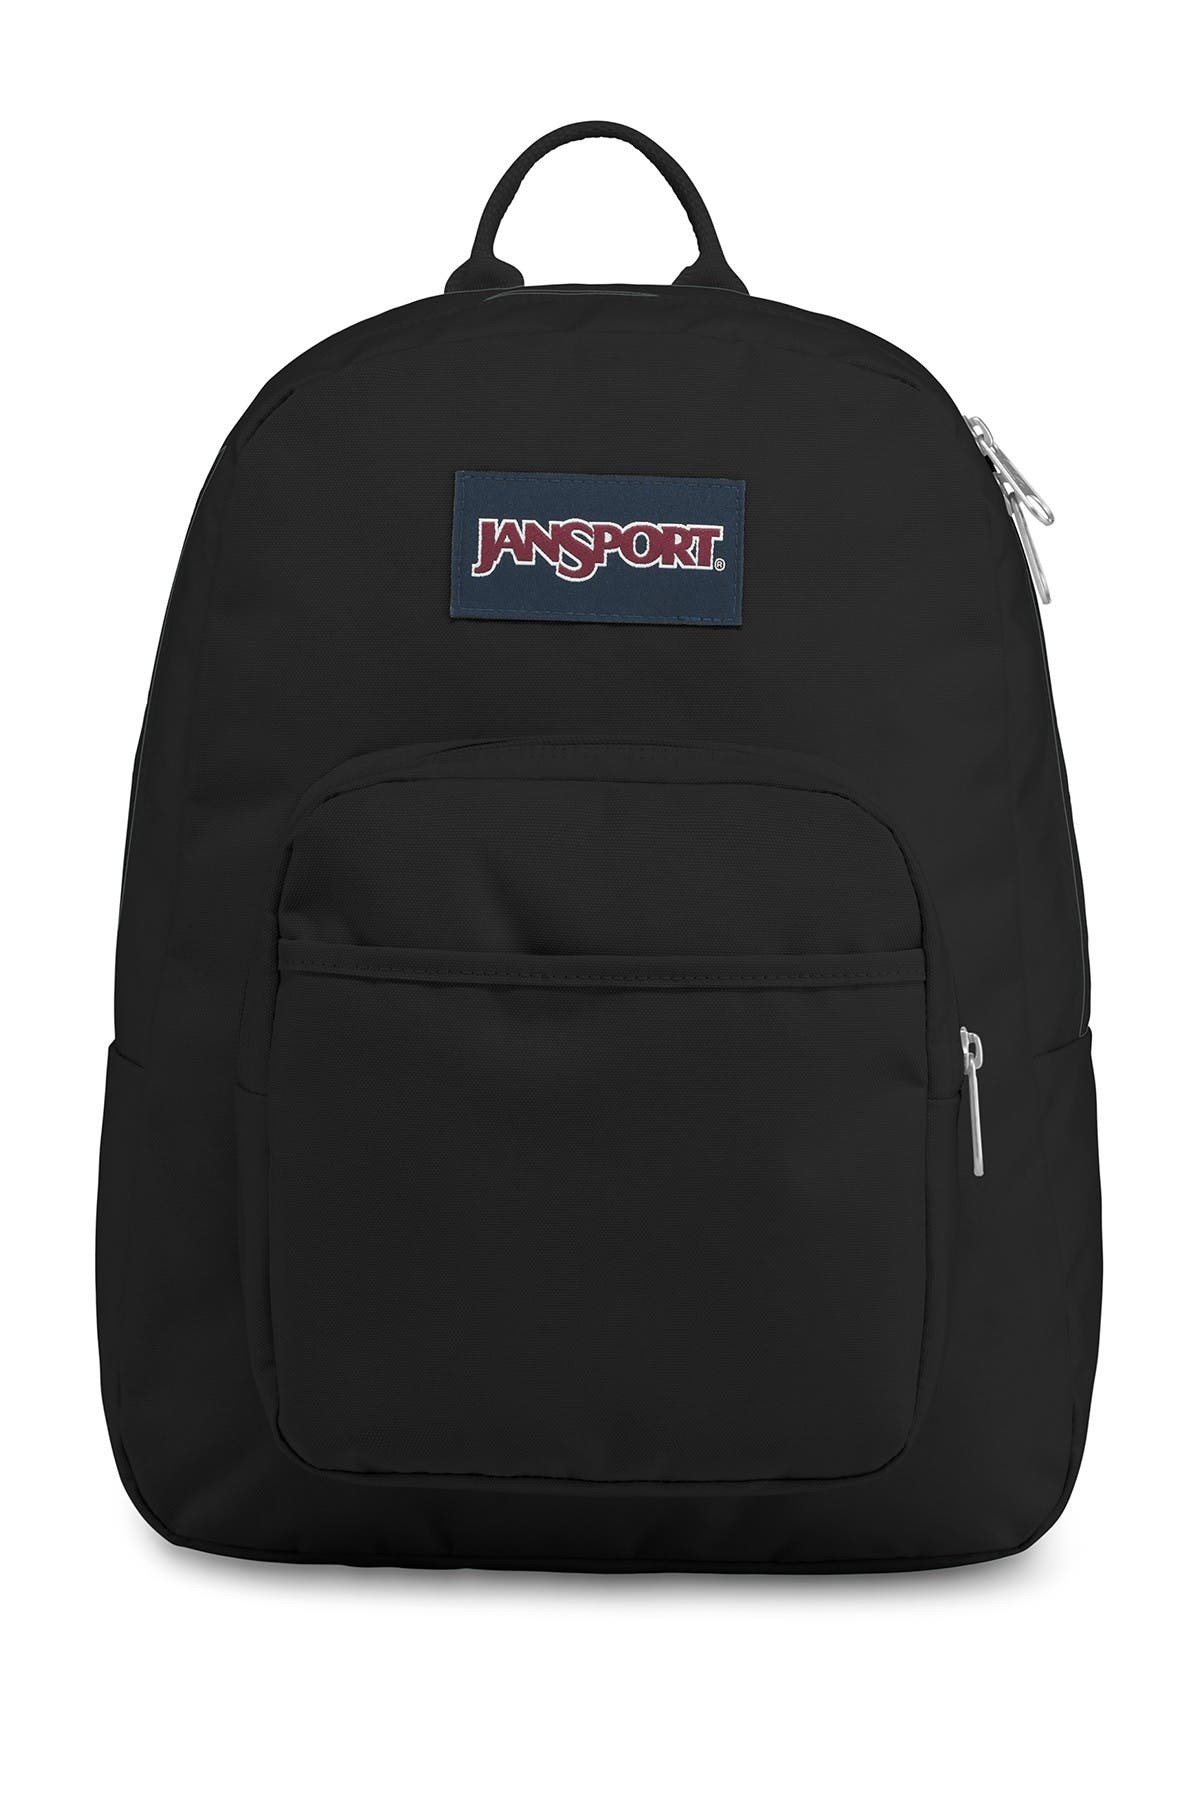 jansport clear mini backpack